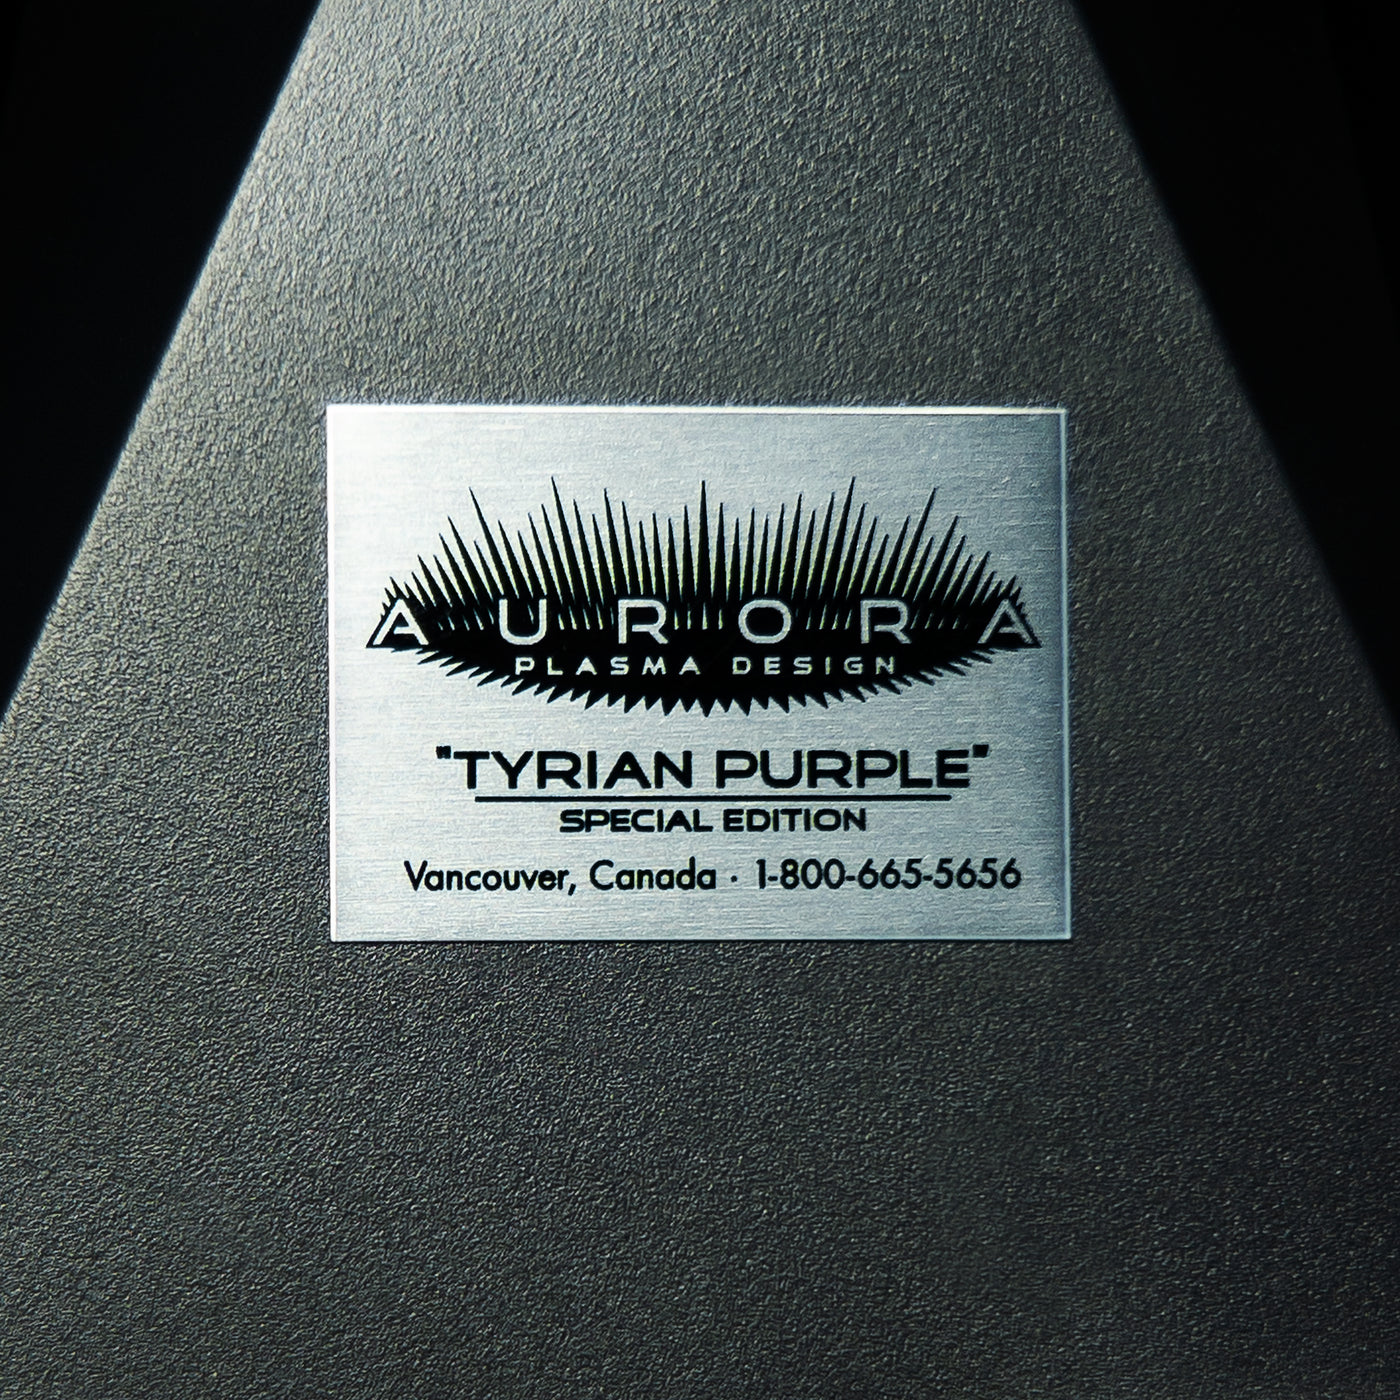 Tyrian Purple “Special Edition” Plasma Globe